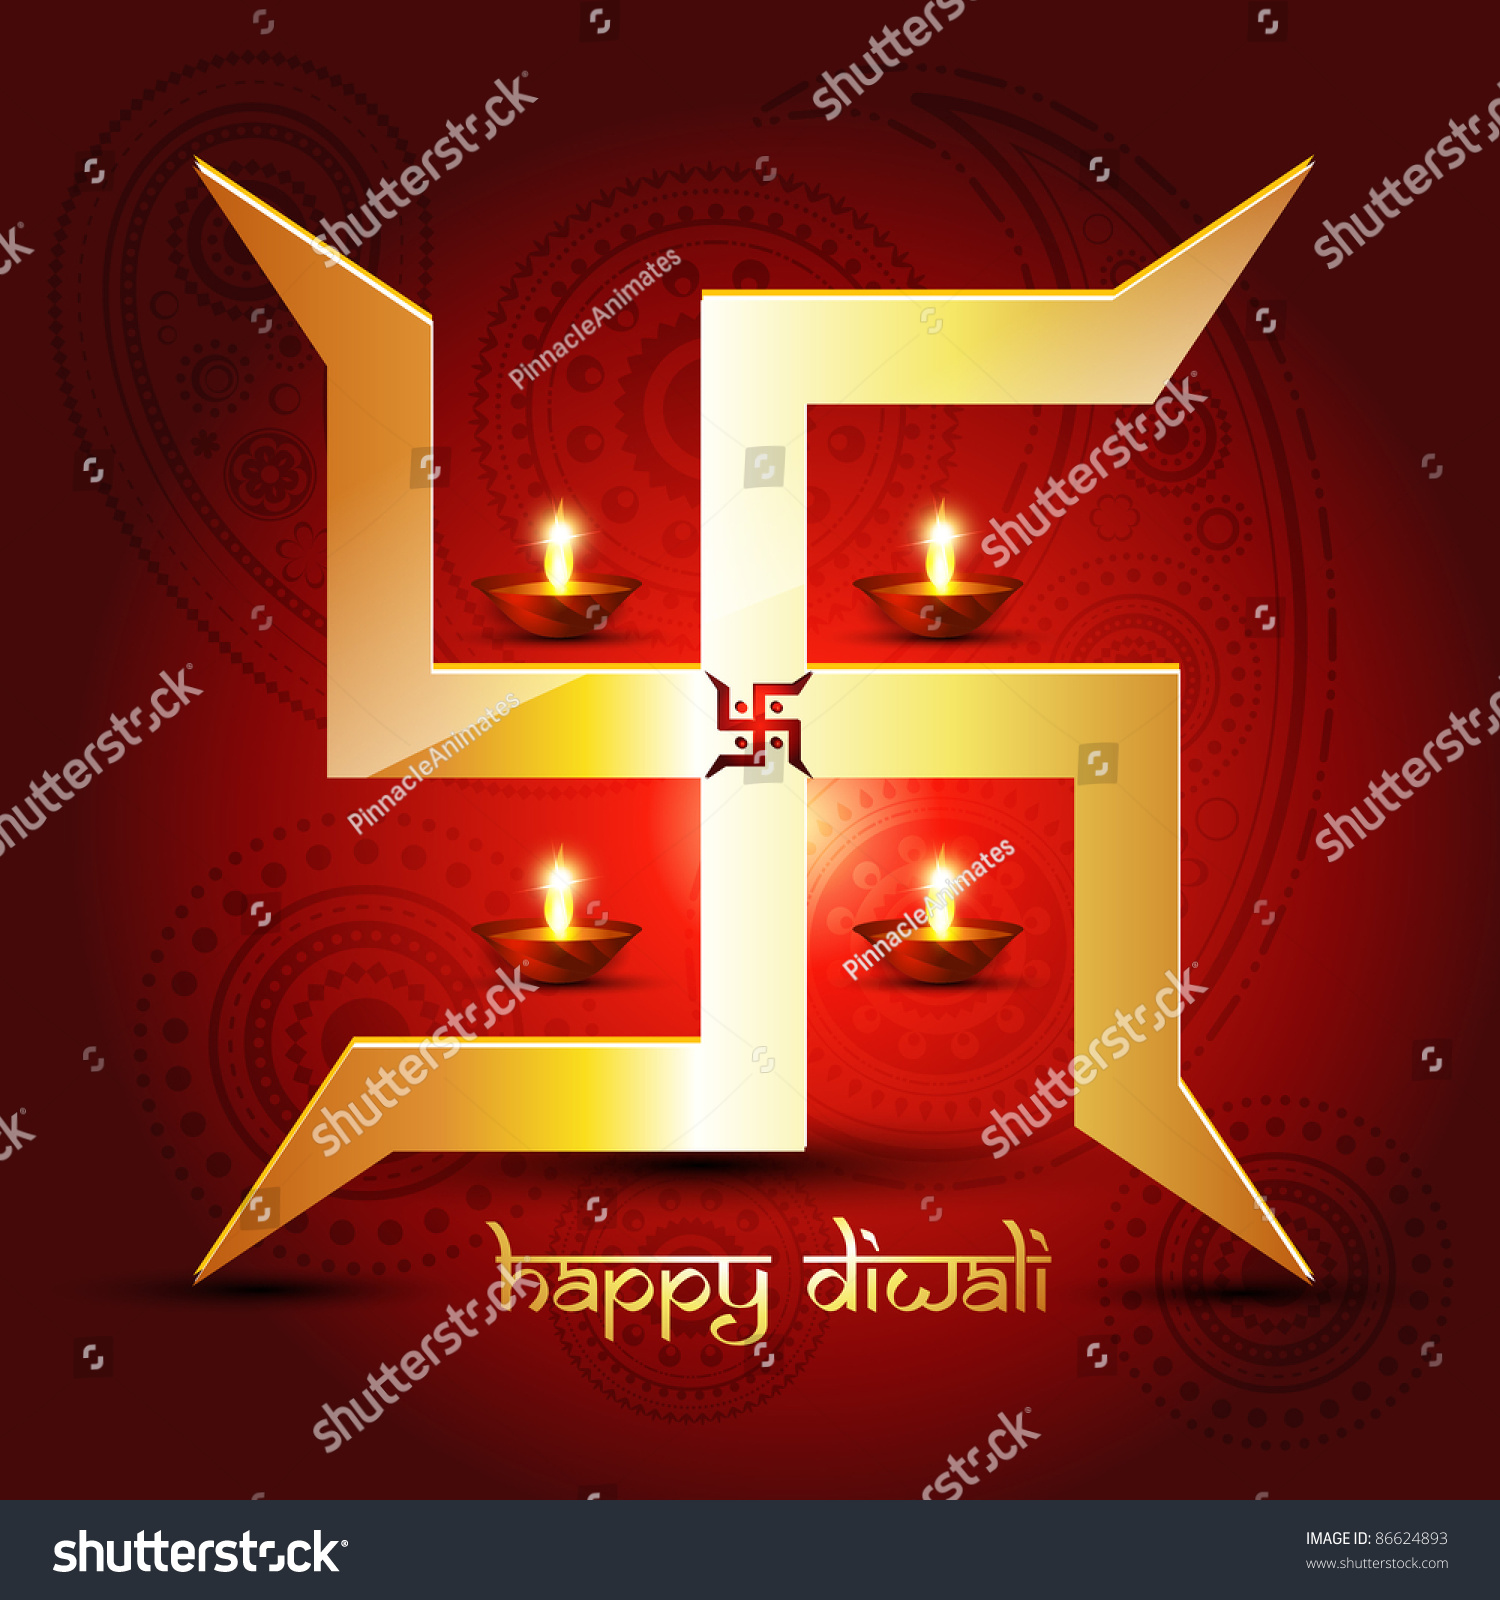 stock-vector-diwali-diya-with-swastik-symbol-86624893.jpg